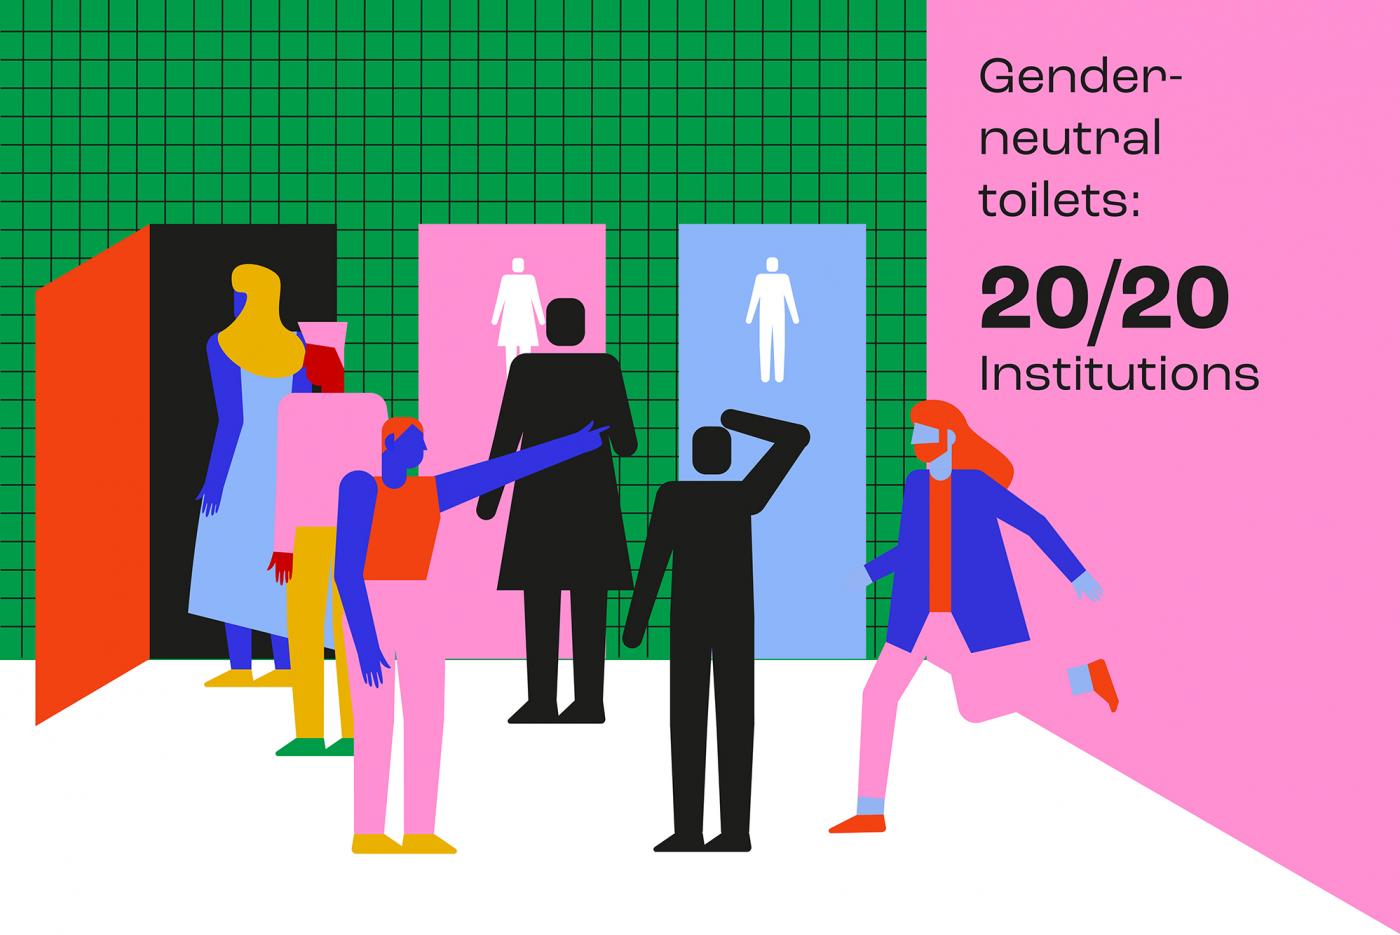 Gender-neutral toilets